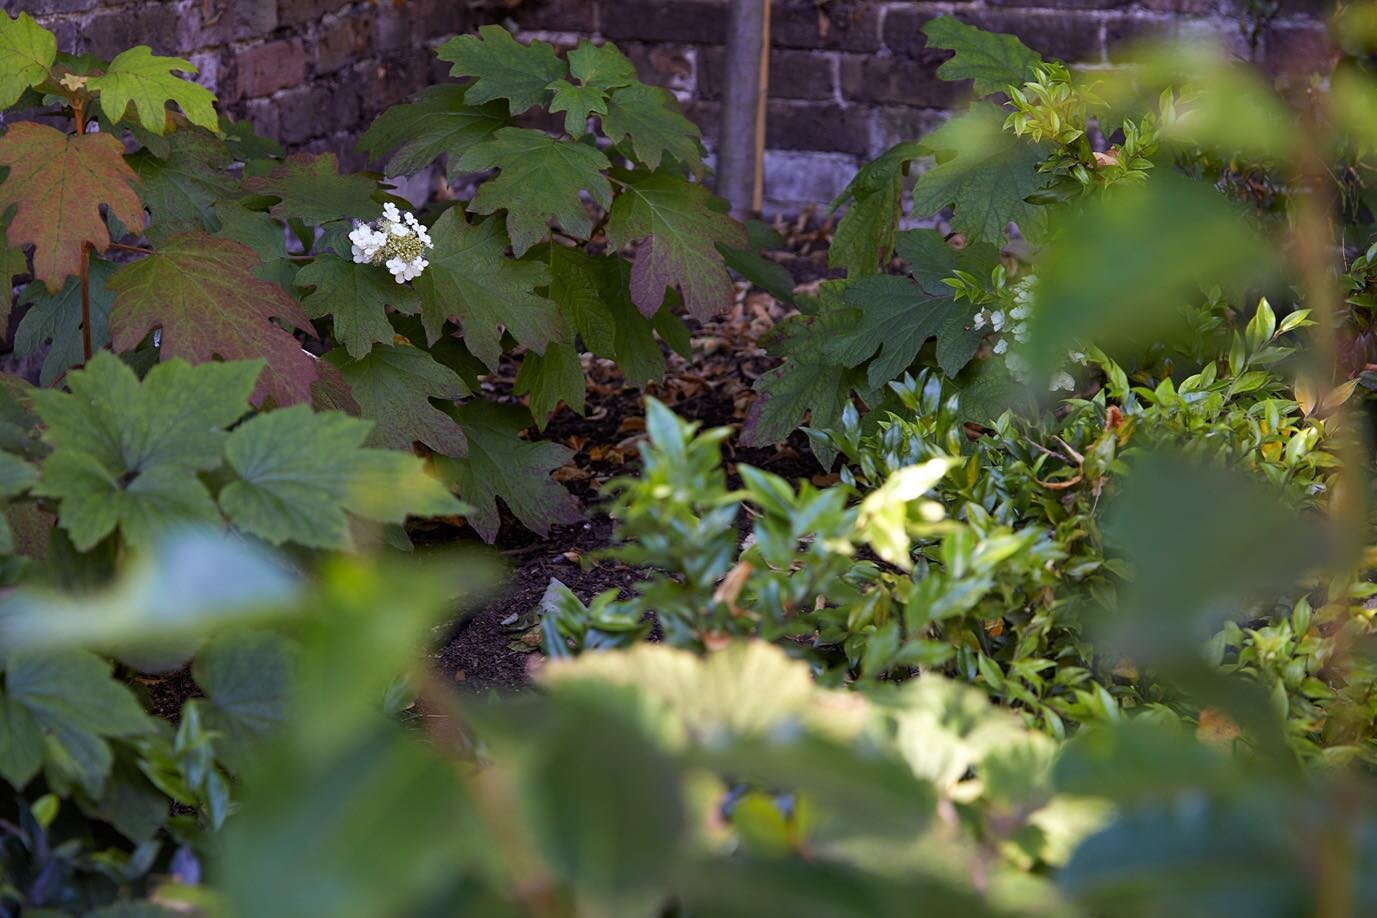 A shady corner of a west London garden 

Photo: @annastathakiphoto